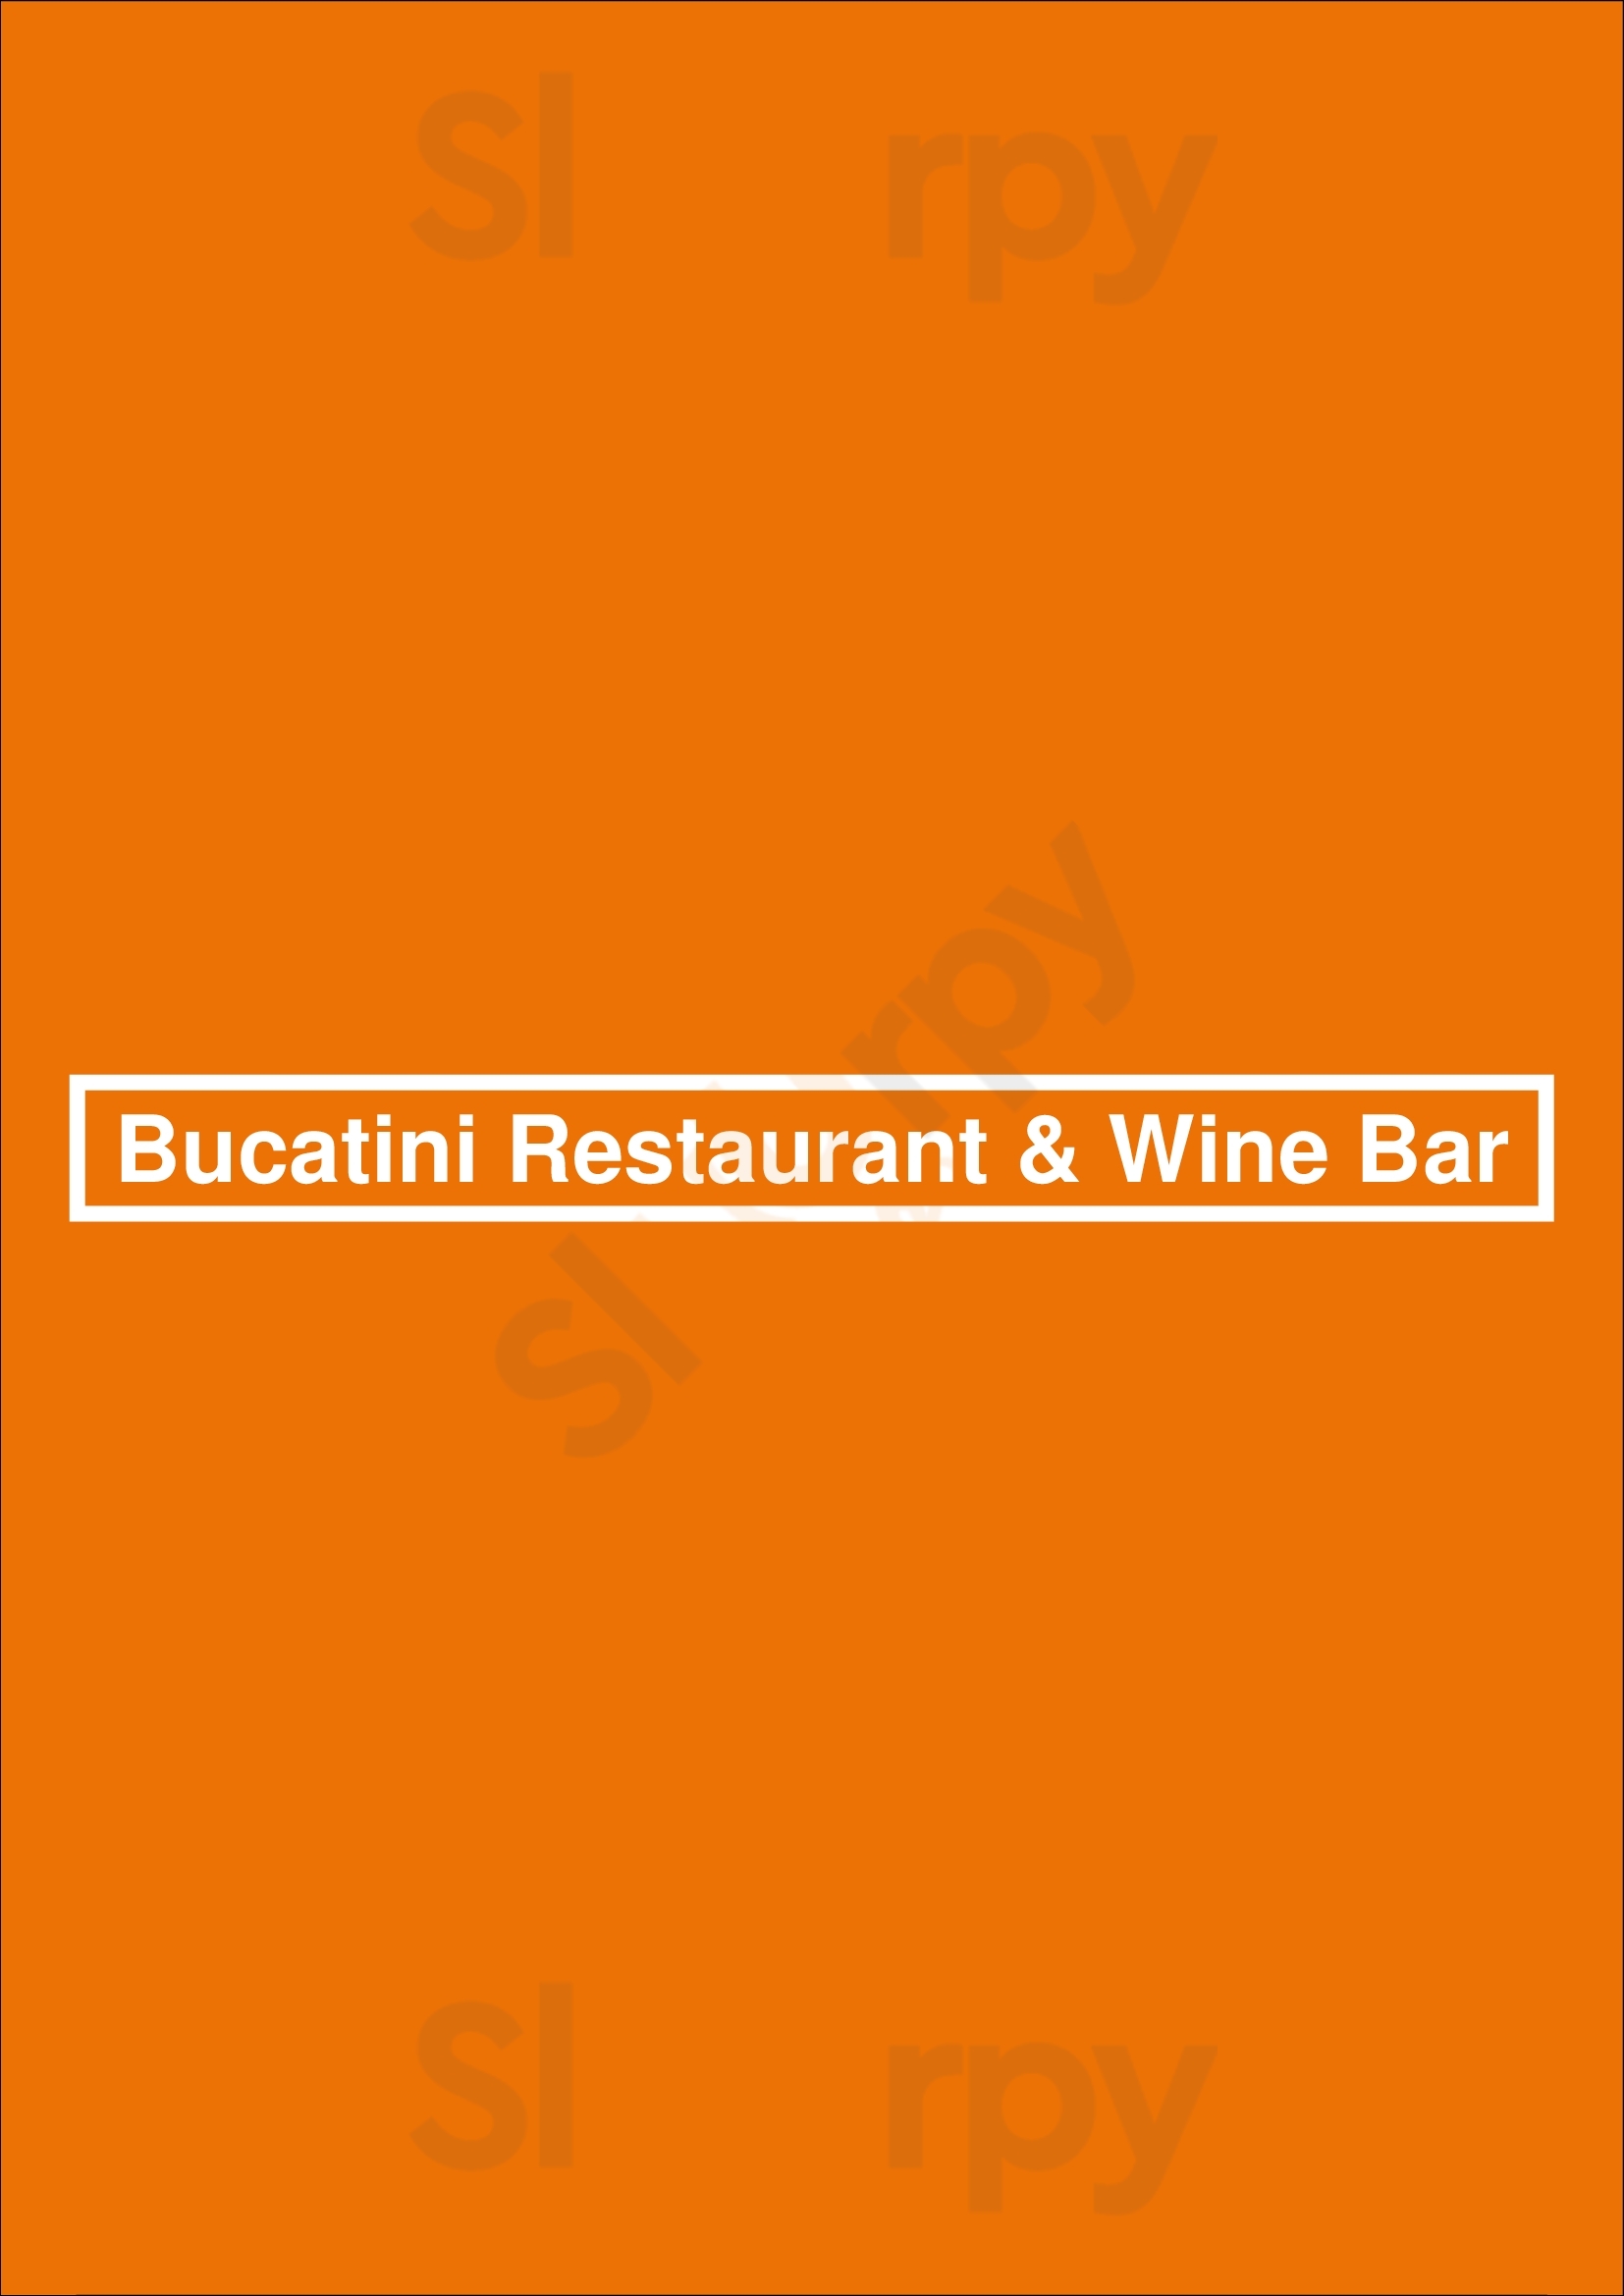 Bucatini Restaurant & Wine Bar Brampton Menu - 1